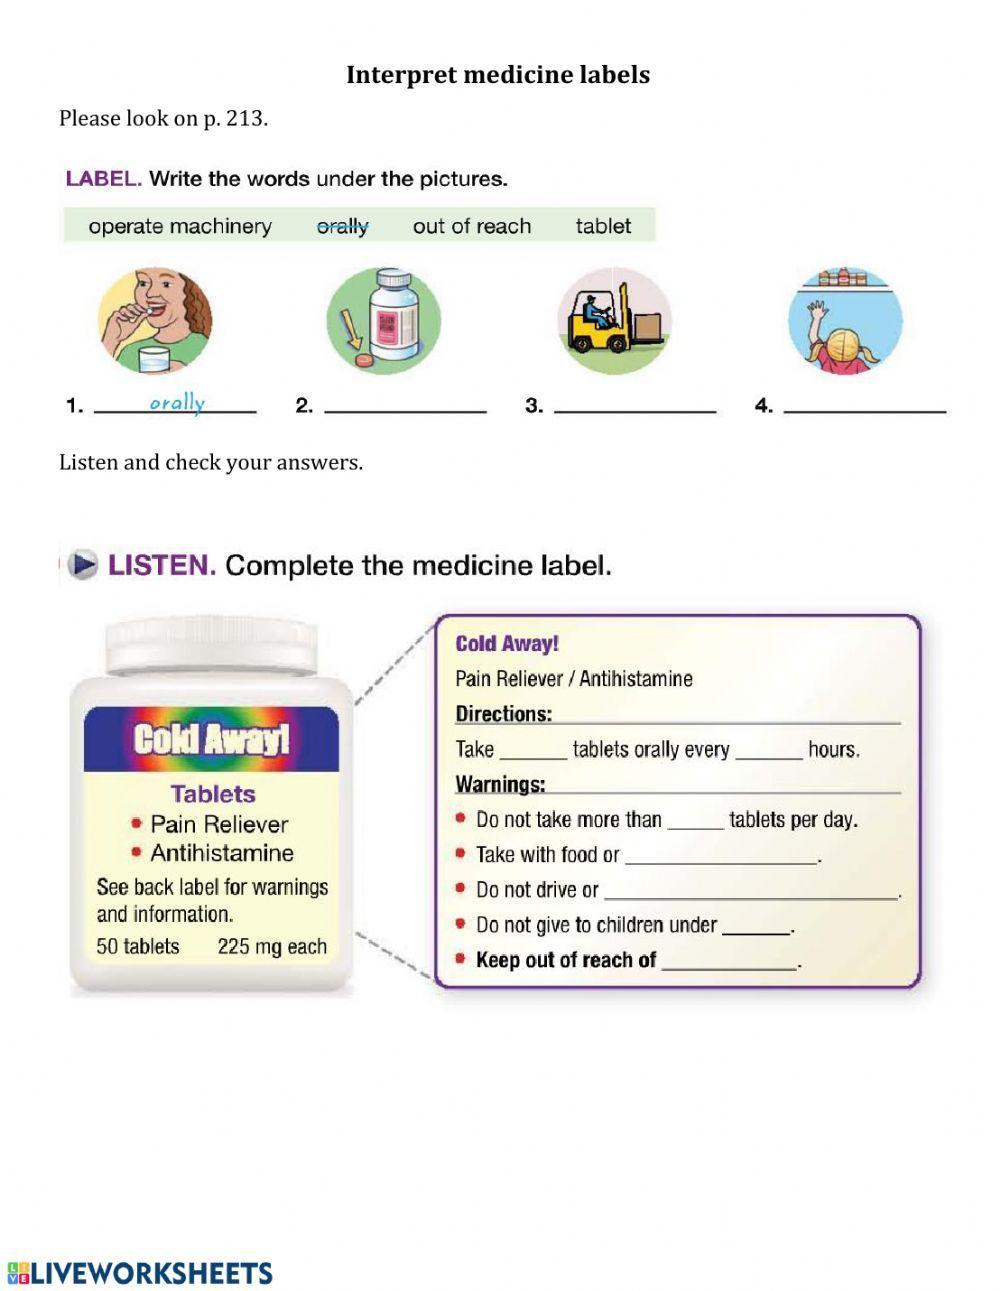 Interpret a Medicine Label